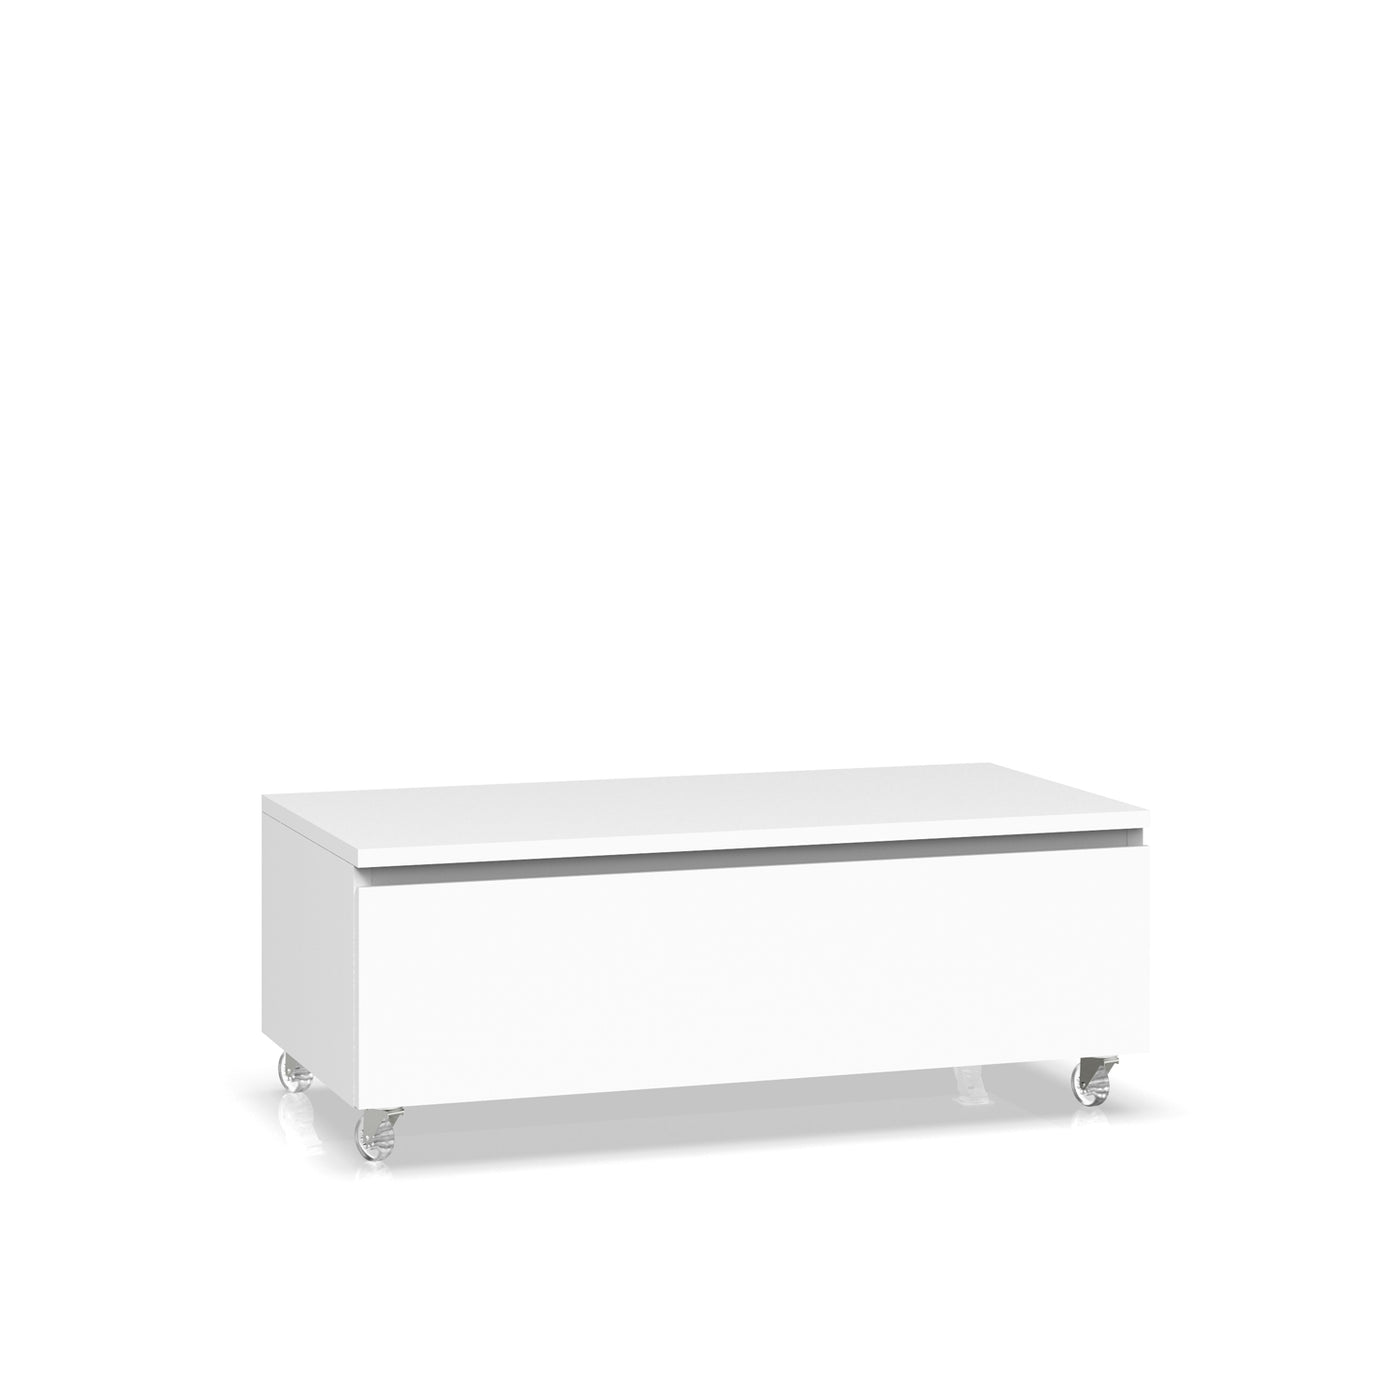 YOKA white chest of drawers 90 cm